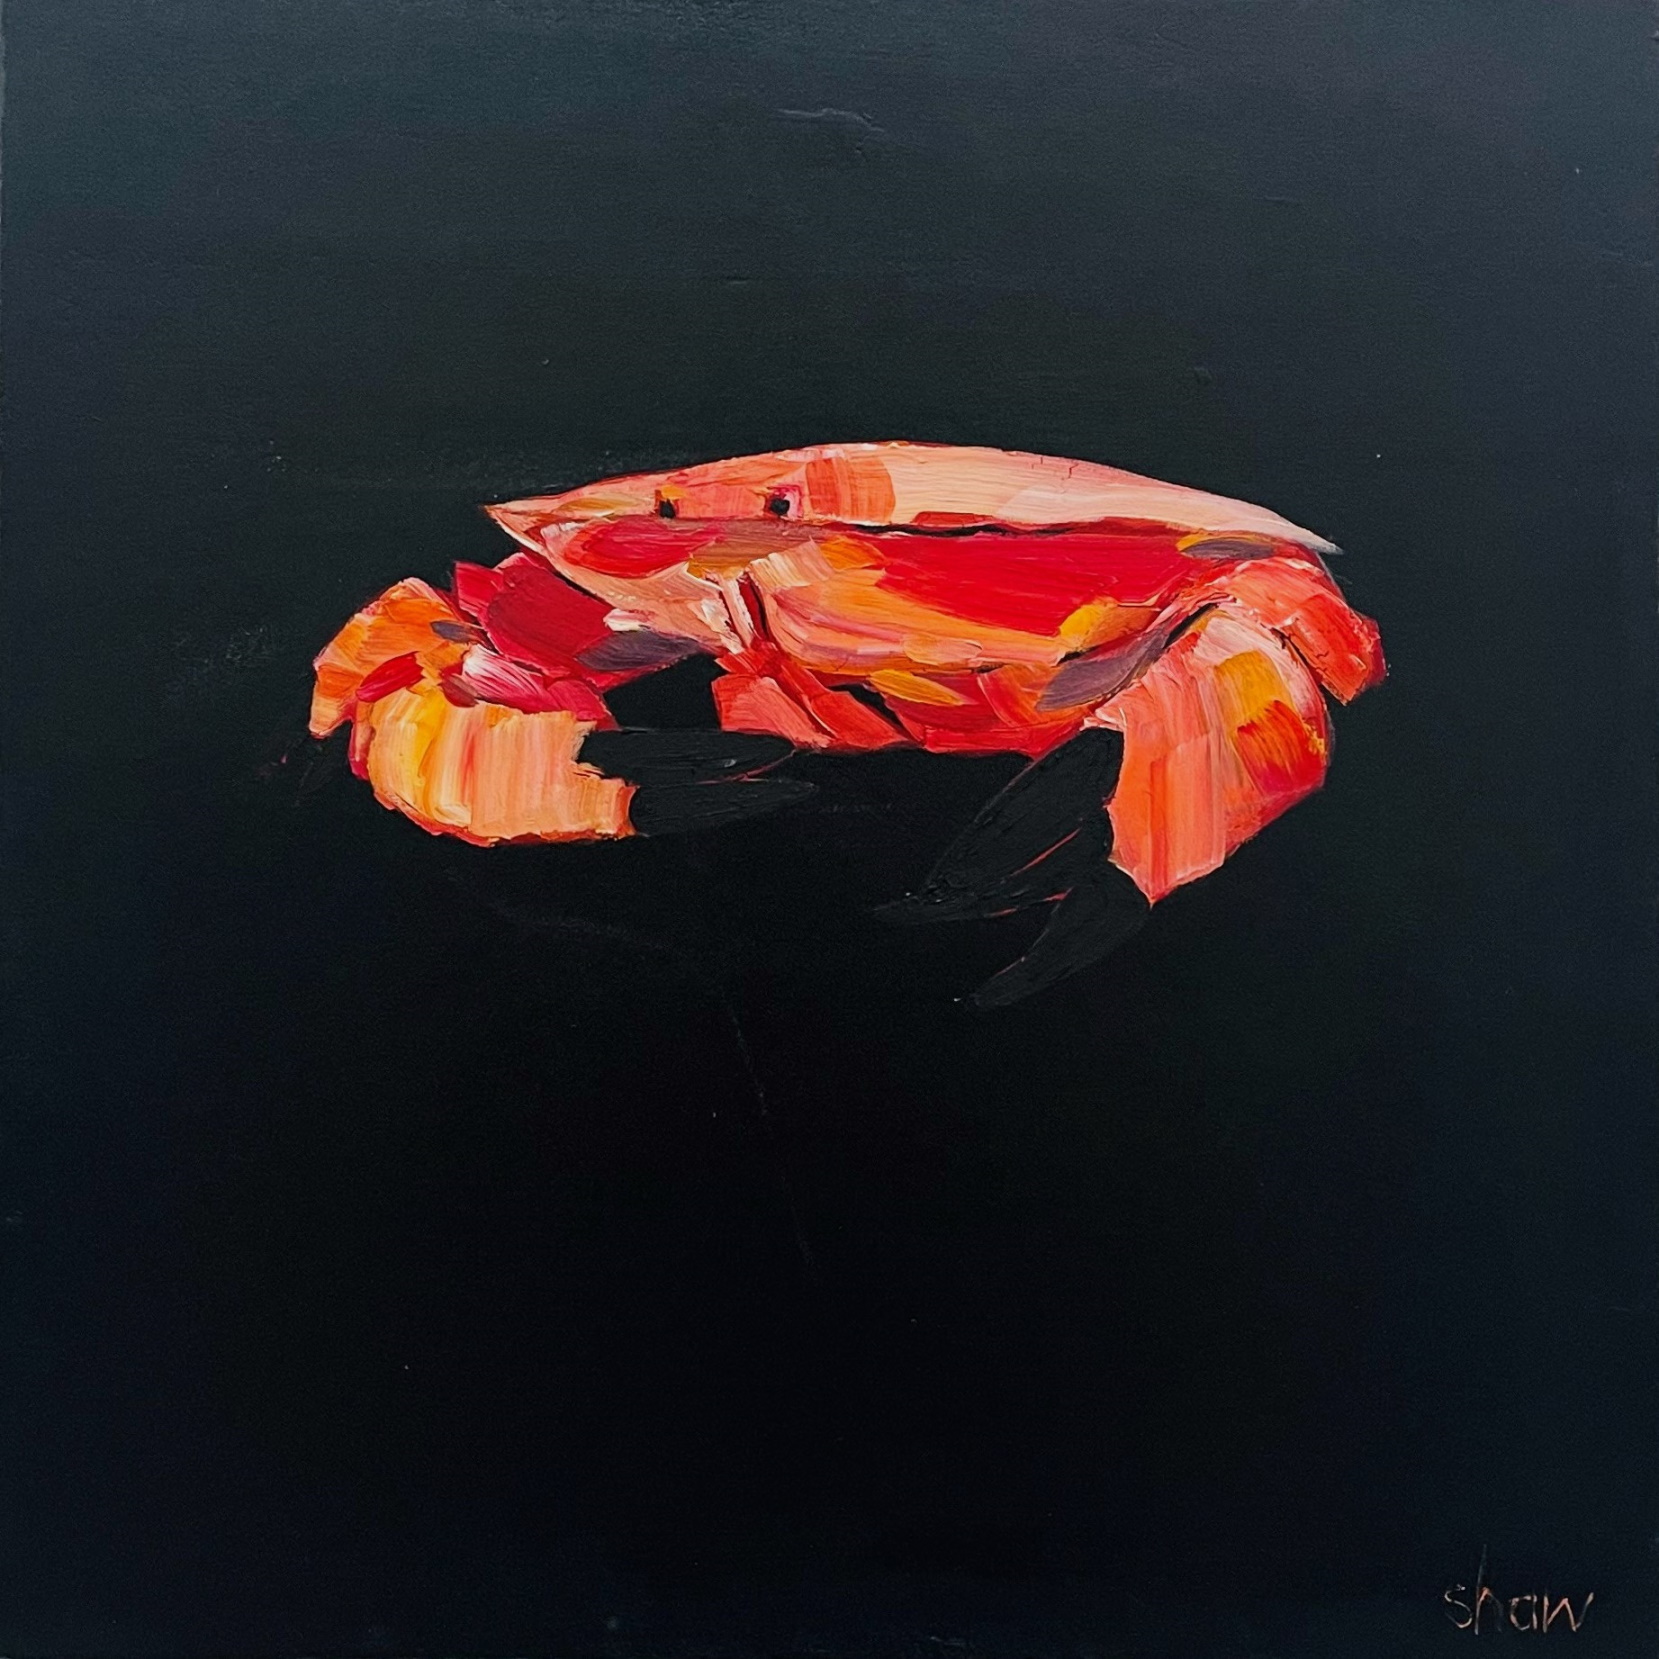 'Crab' by artist Rob Shaw